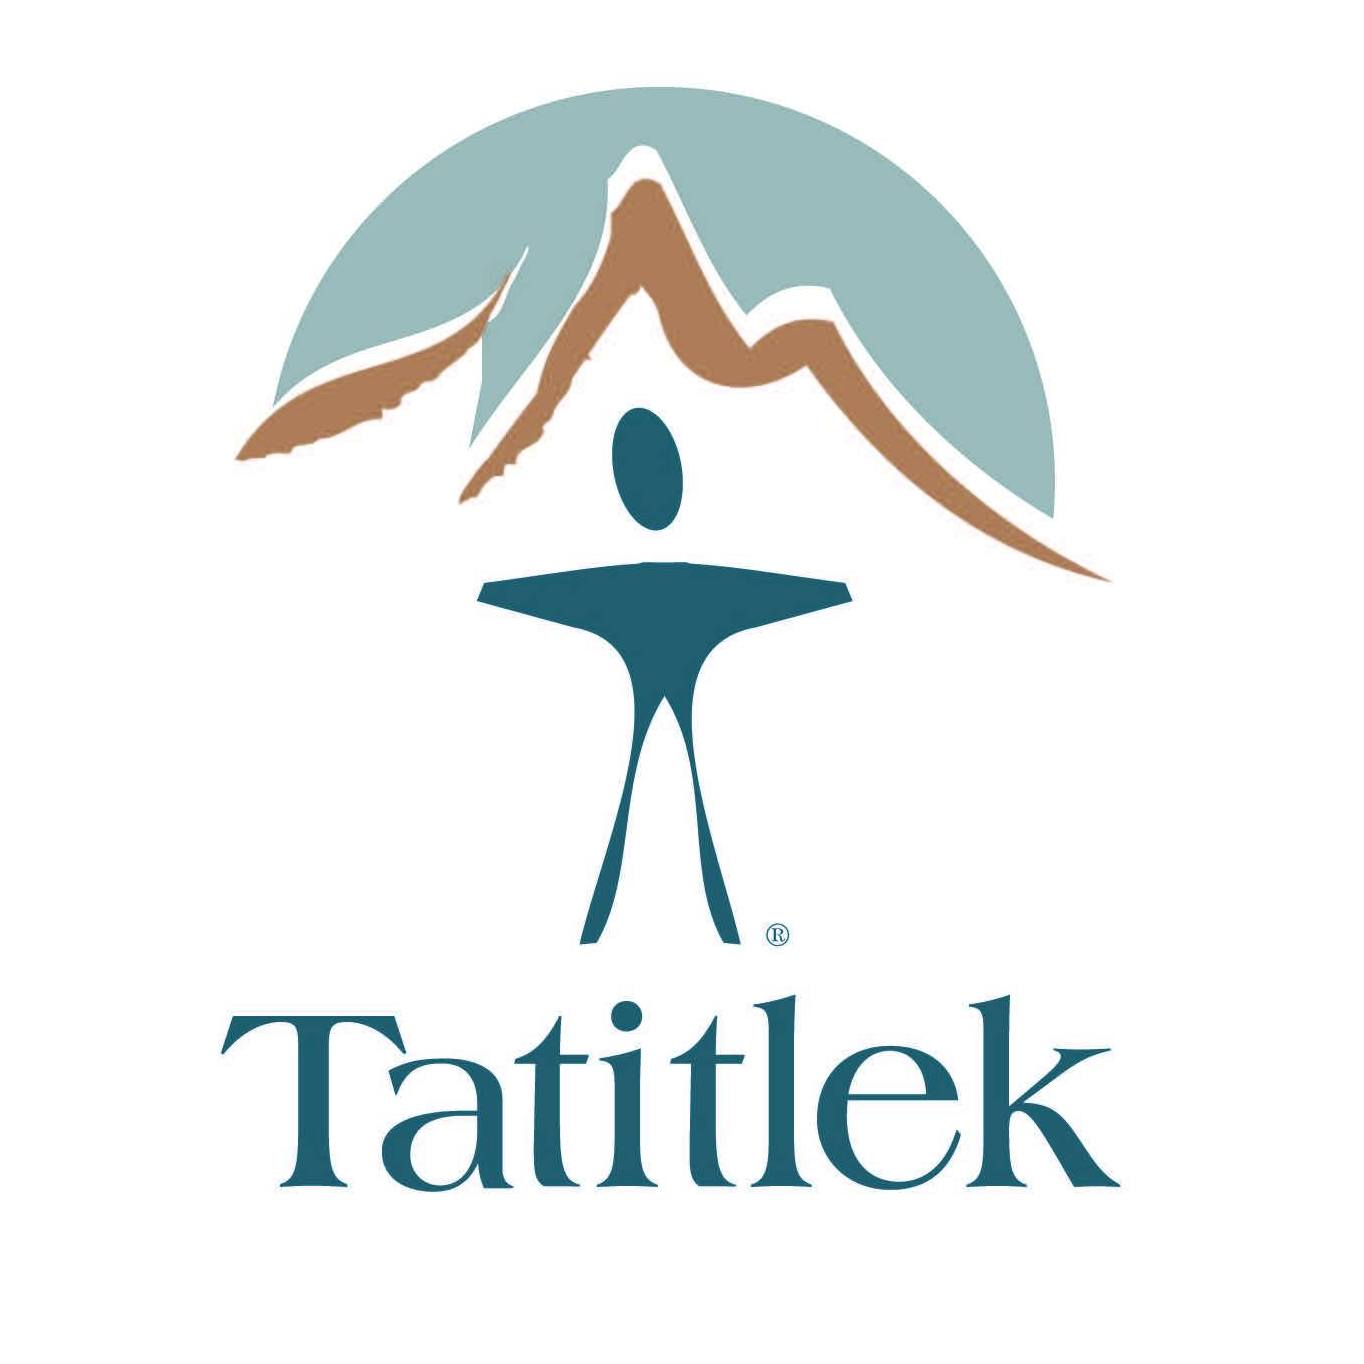 The Tatitlek